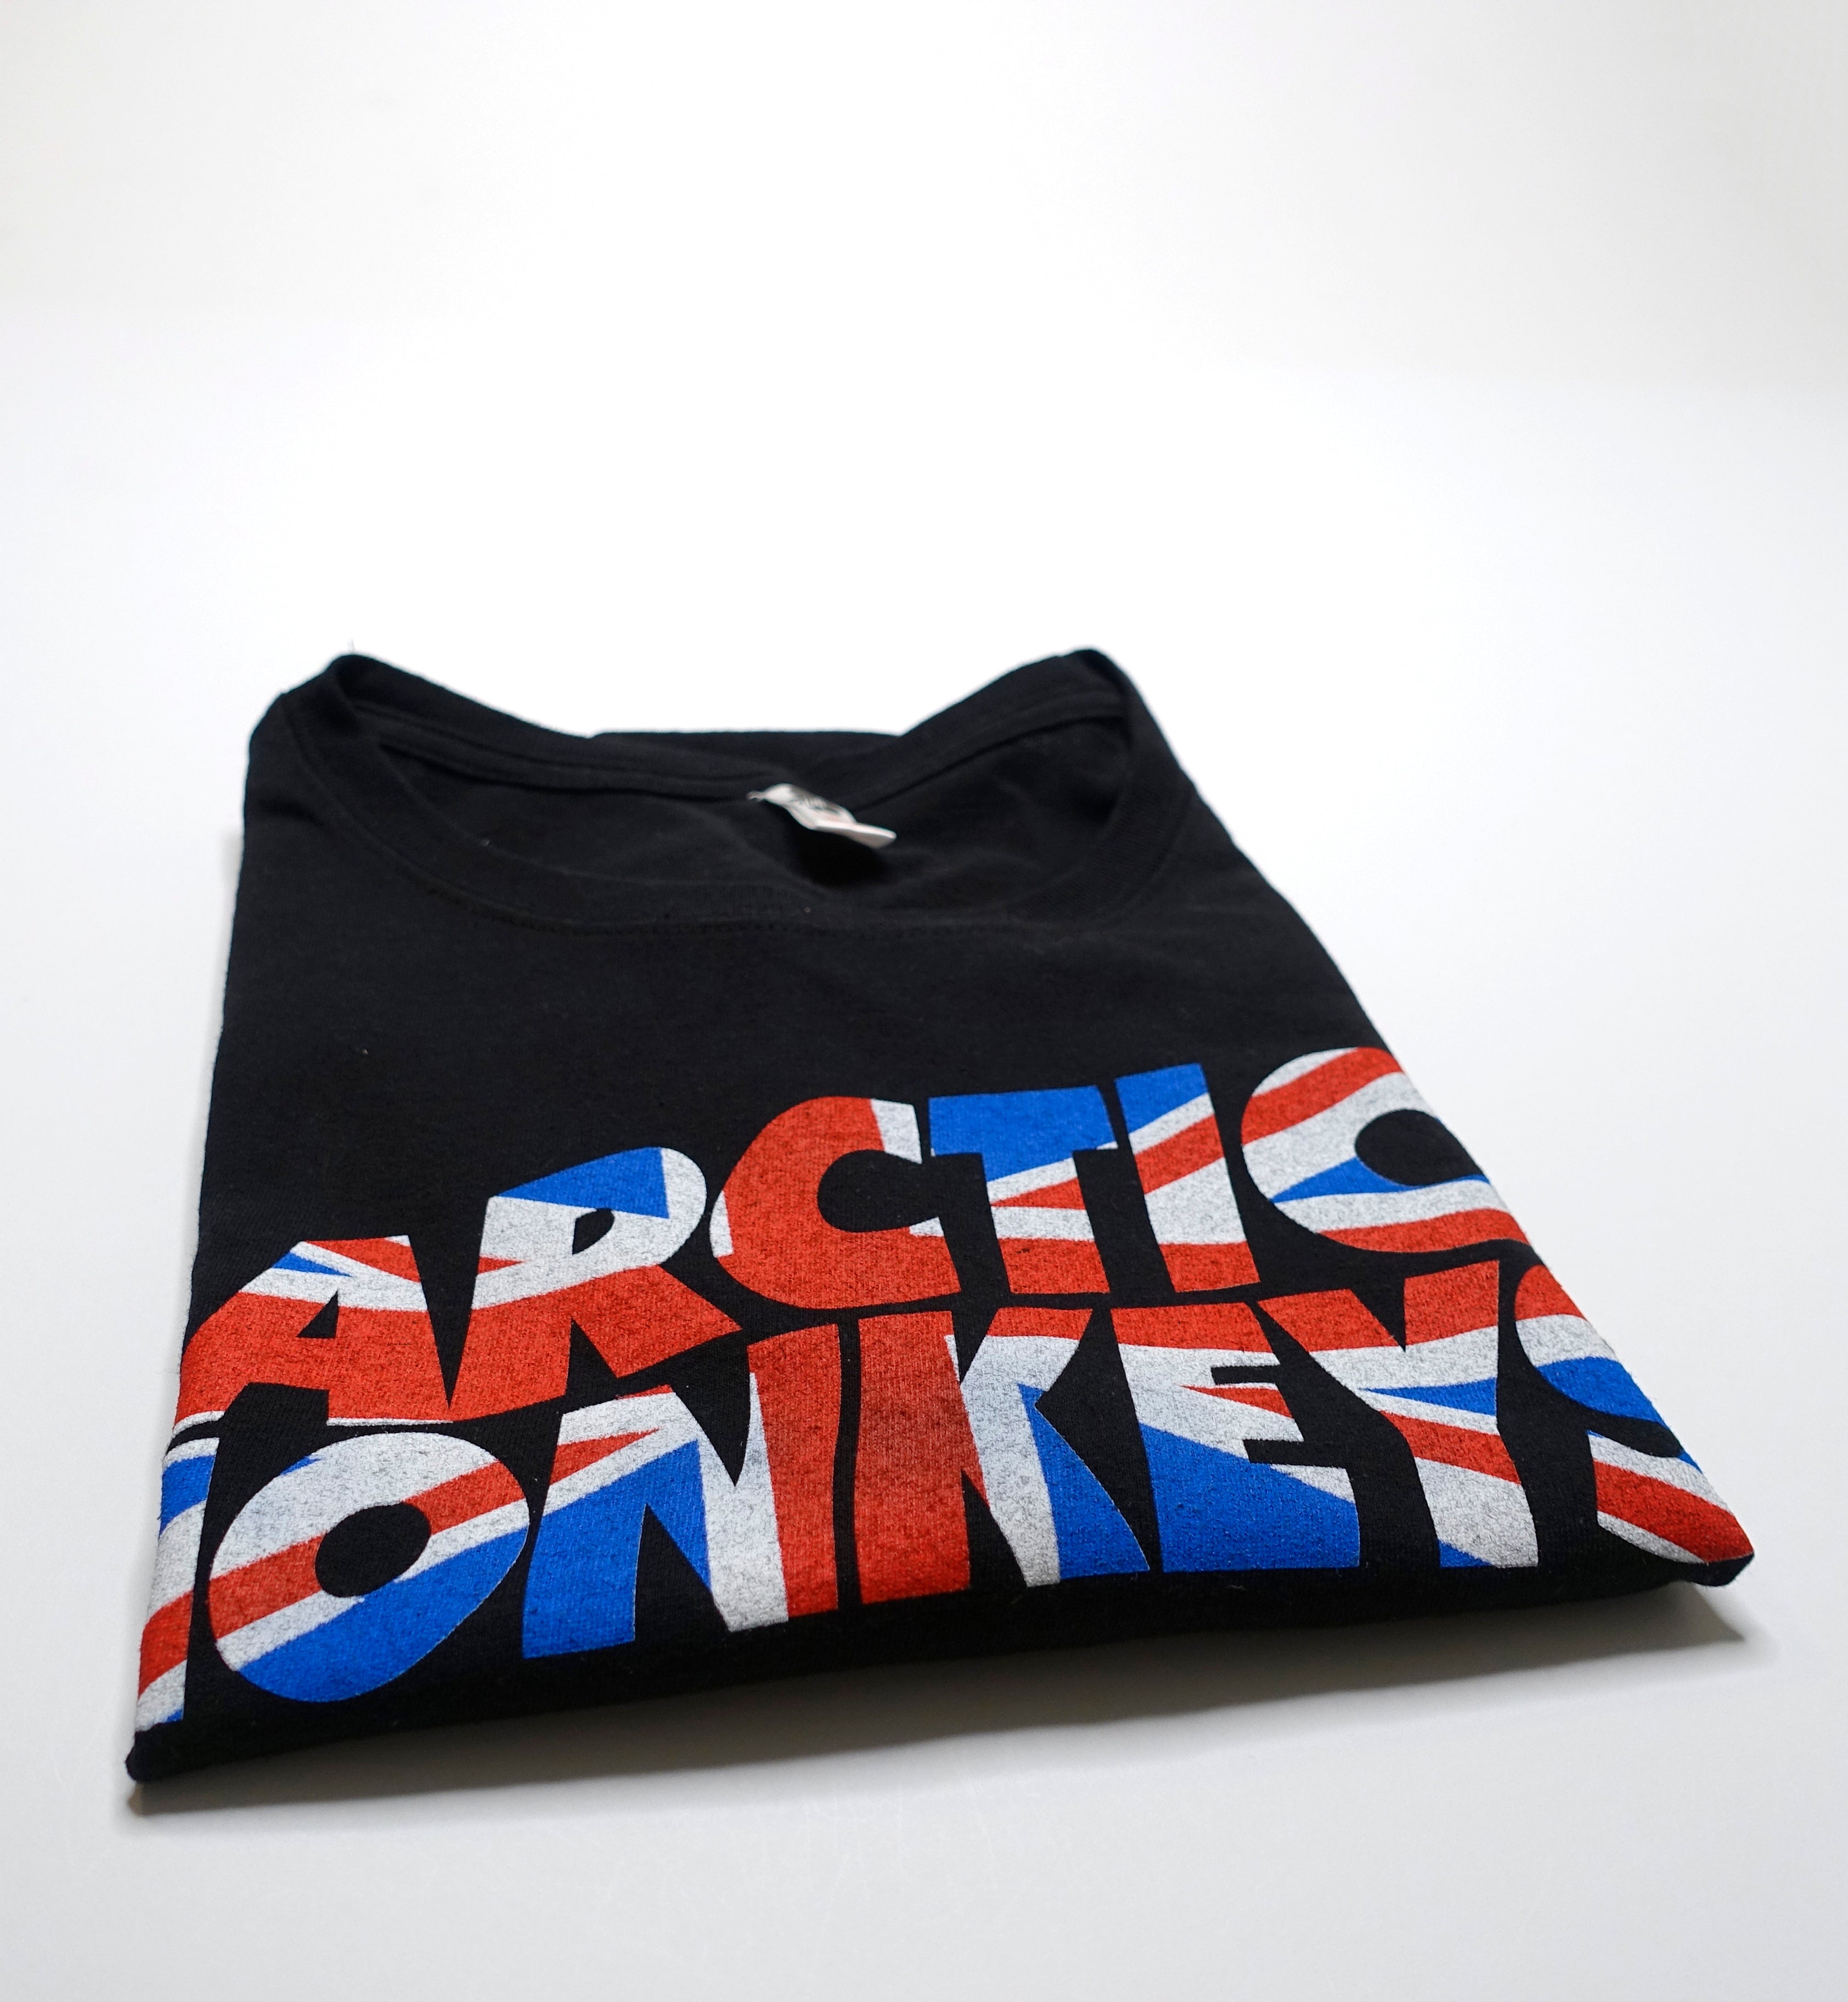 Arctic Monkeys - A.M. UK 2014 Tour Shirt Size XL